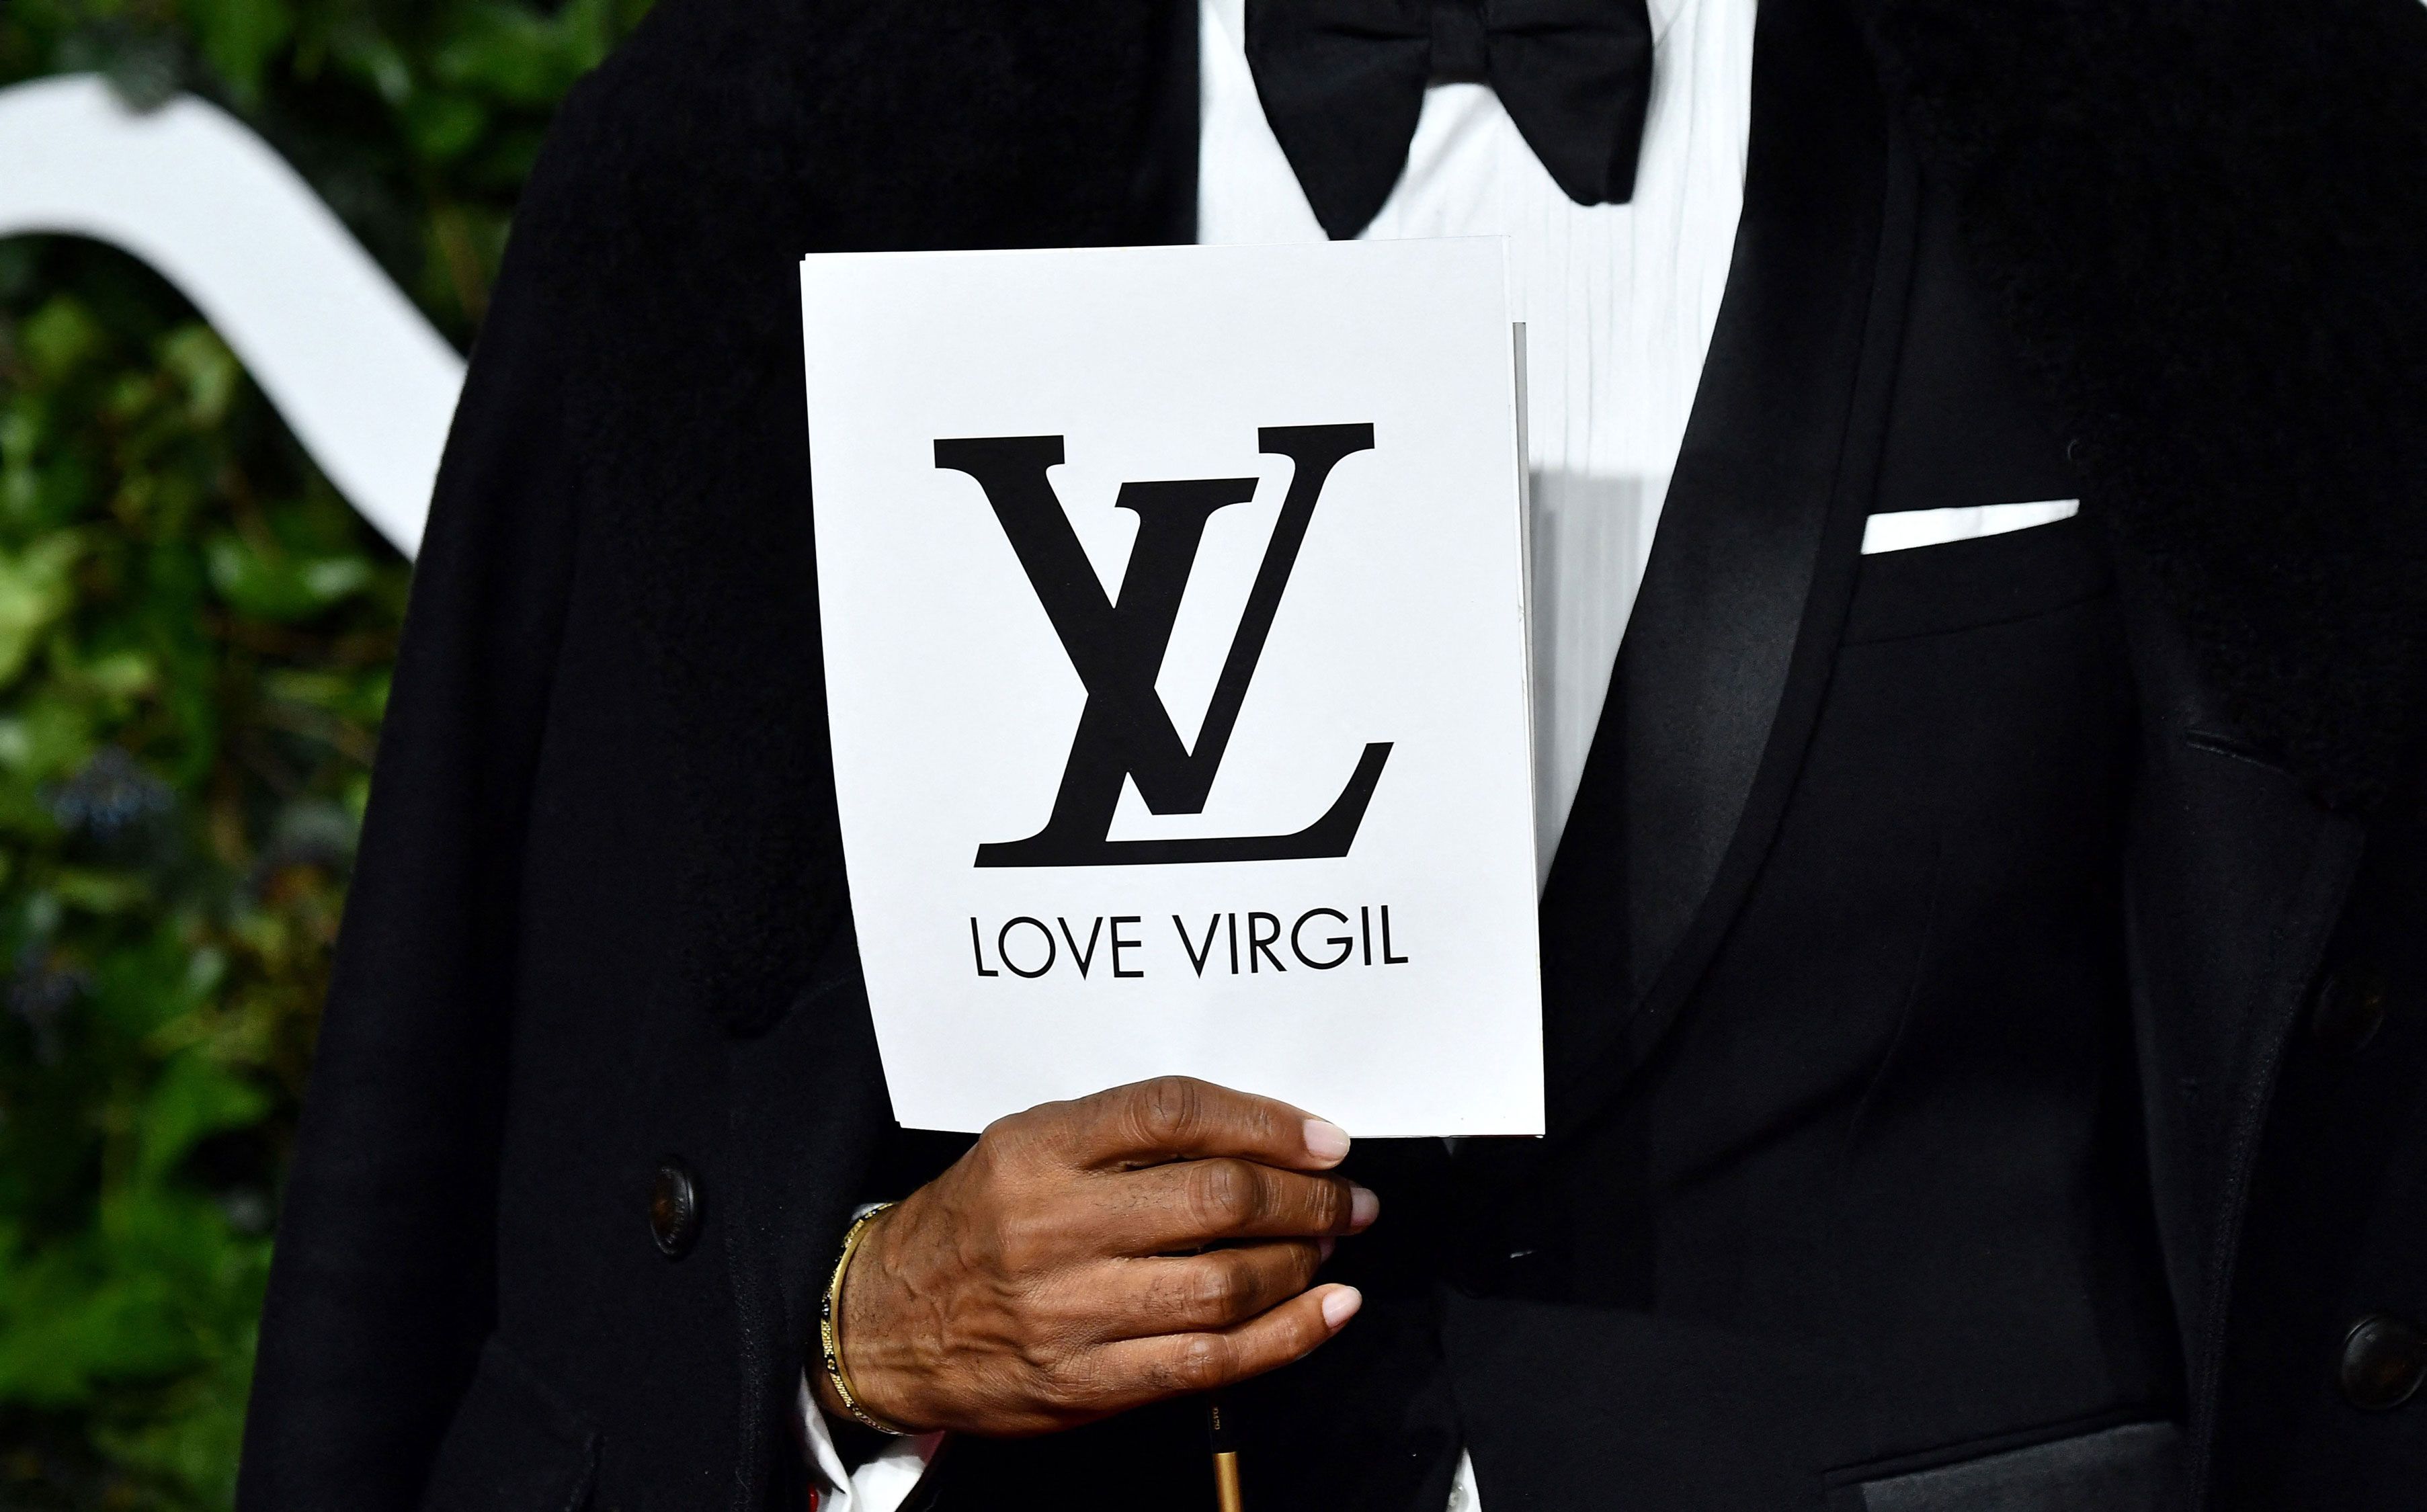 John Boyega Wore A Louis Vuitton Suit @ 2021 Critics Choice Awards